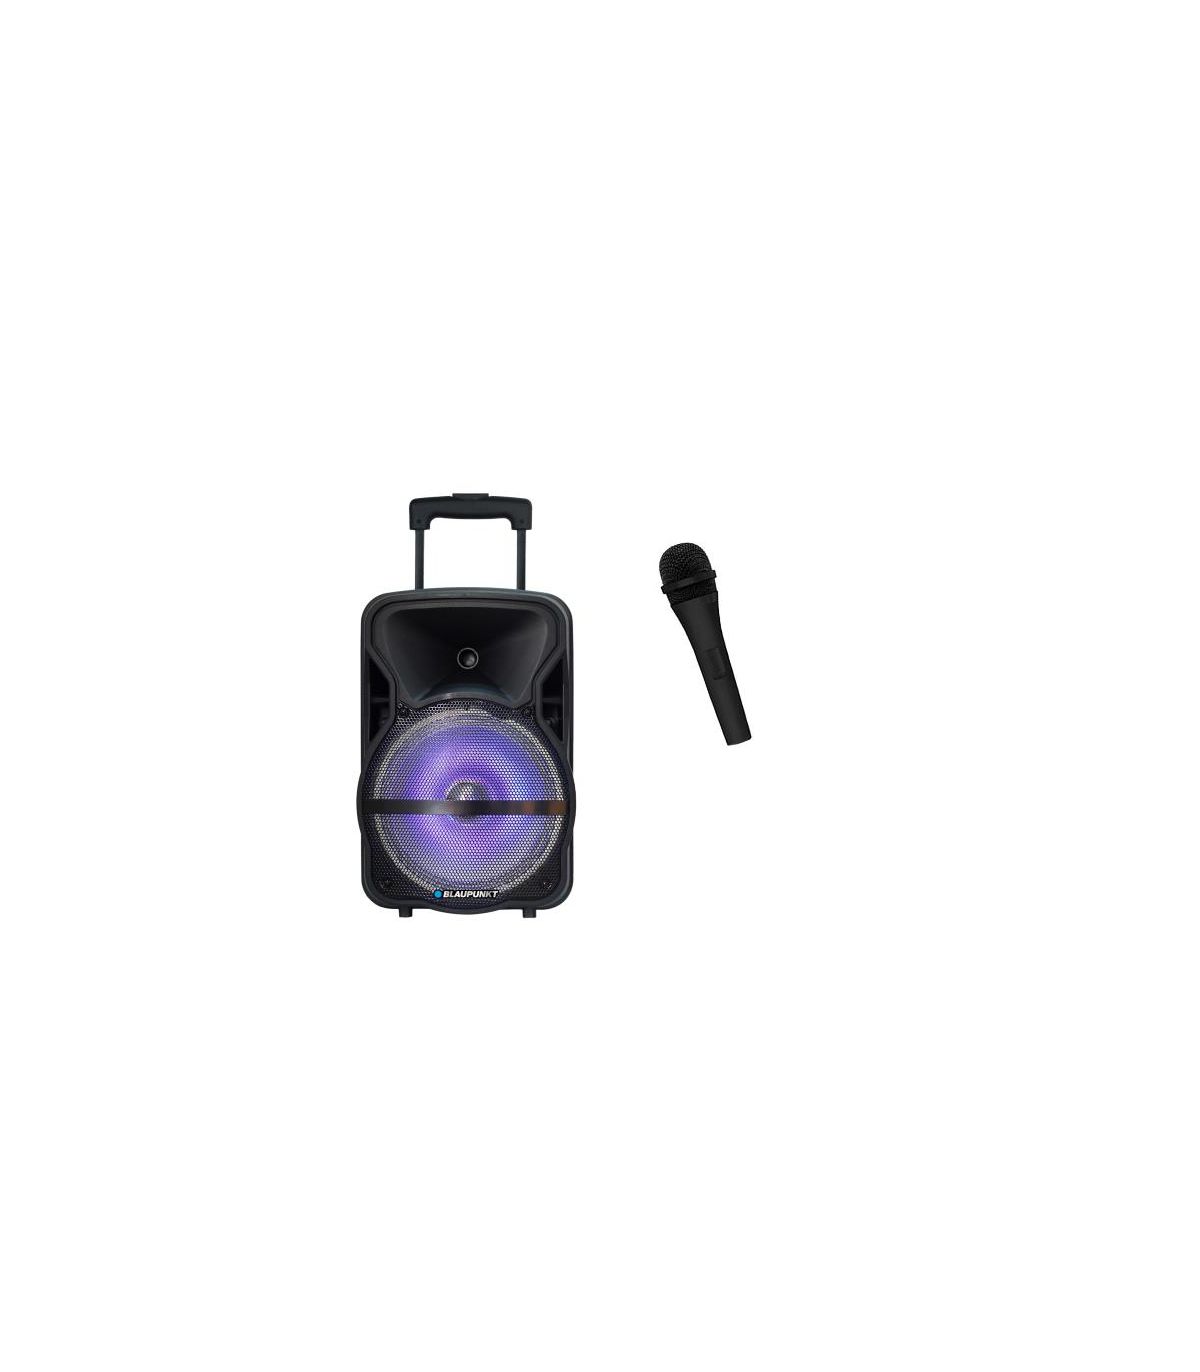 Enceinte karaoké trolley à LED - Blaupunkt - BLP3937-133 - Noir